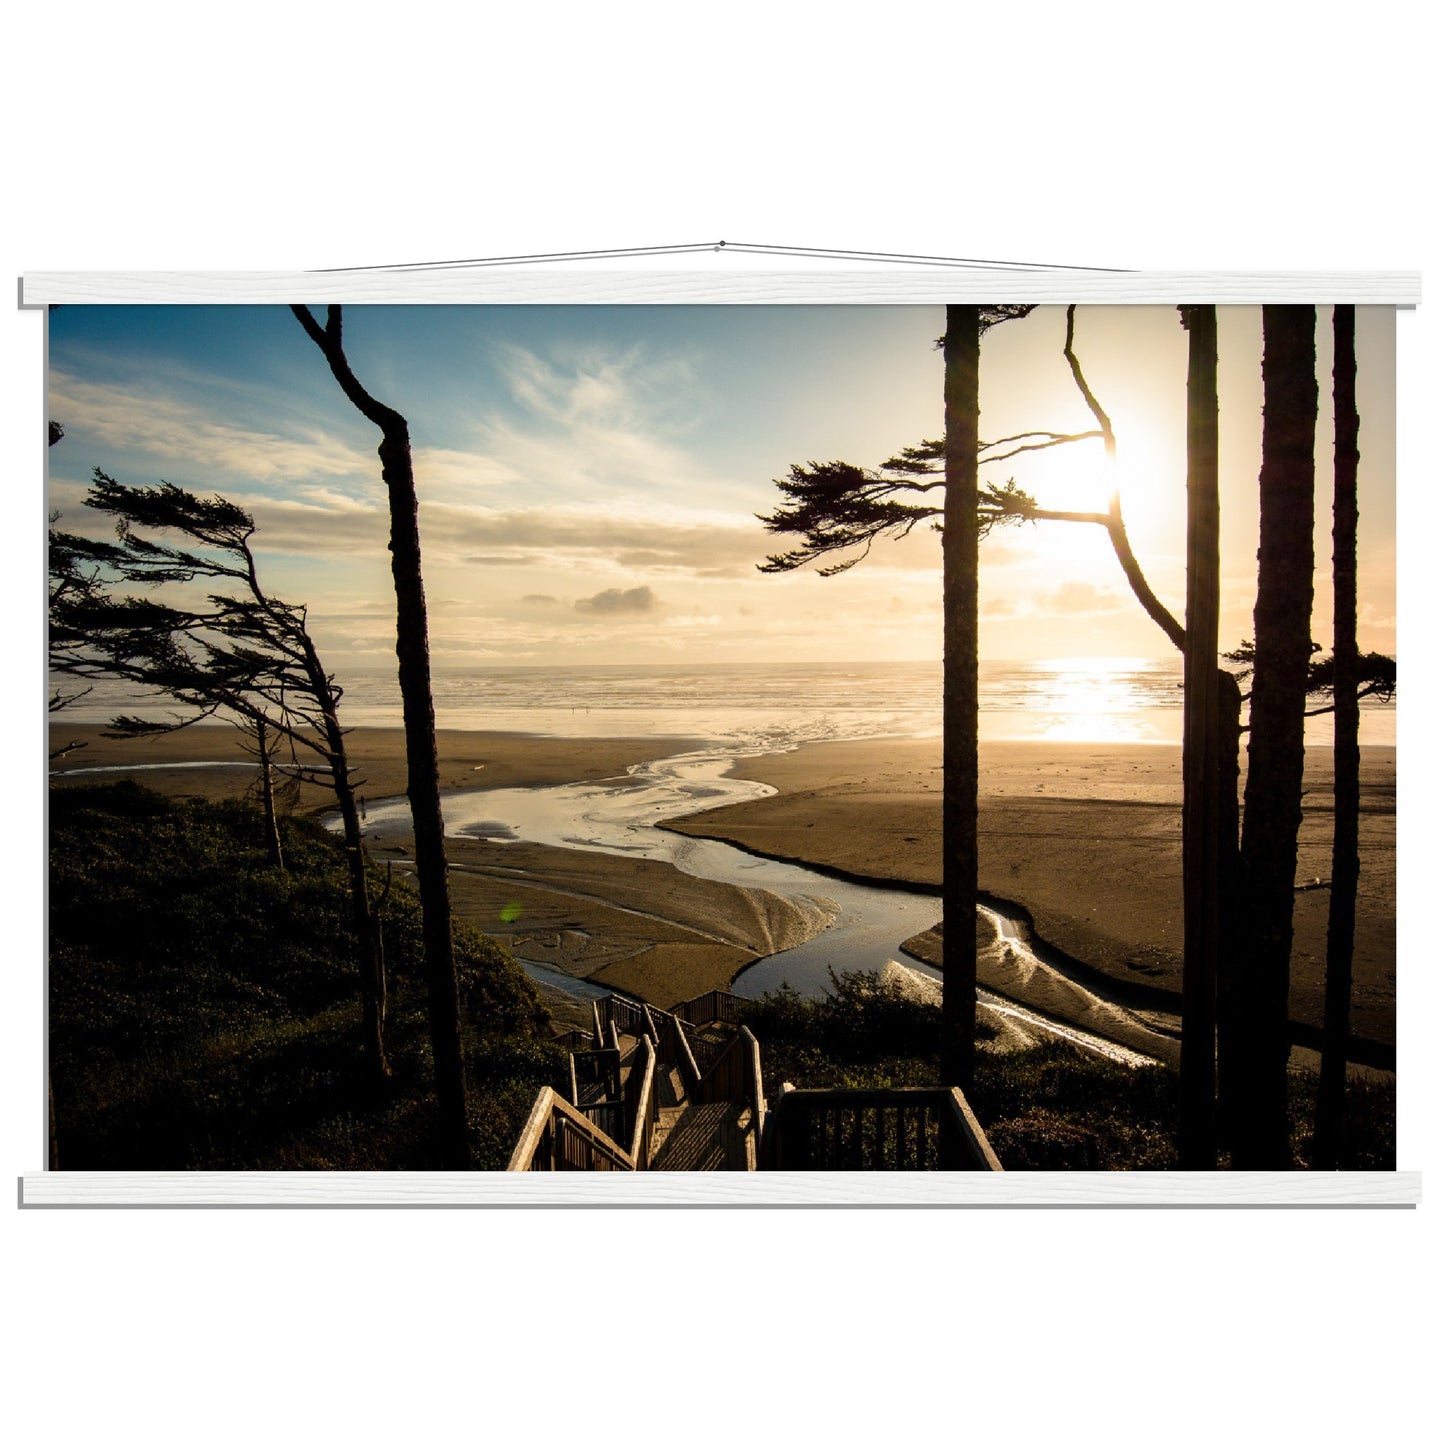 Coastal Sunset Art Print on Premium Semi-Glossy Paper Poster with Hanger